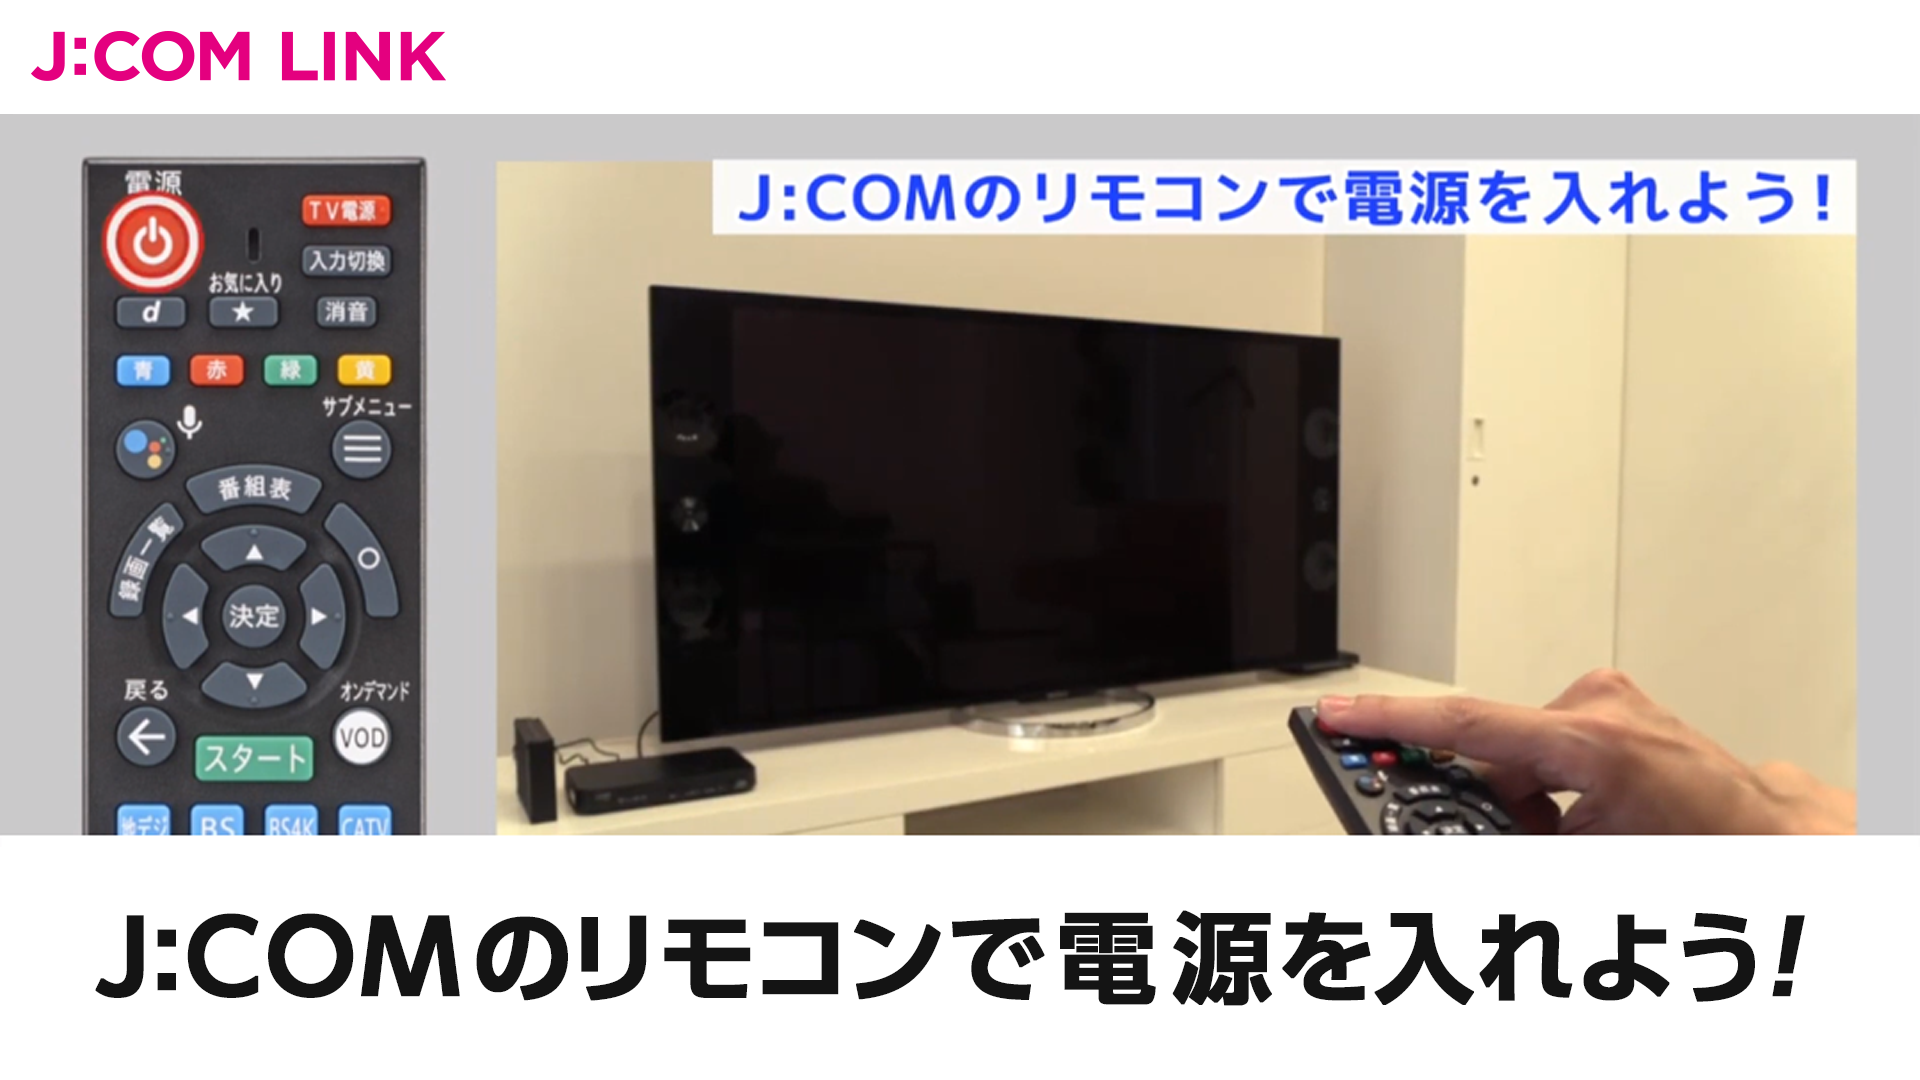 J:COMのリモコンで電源を入れよう